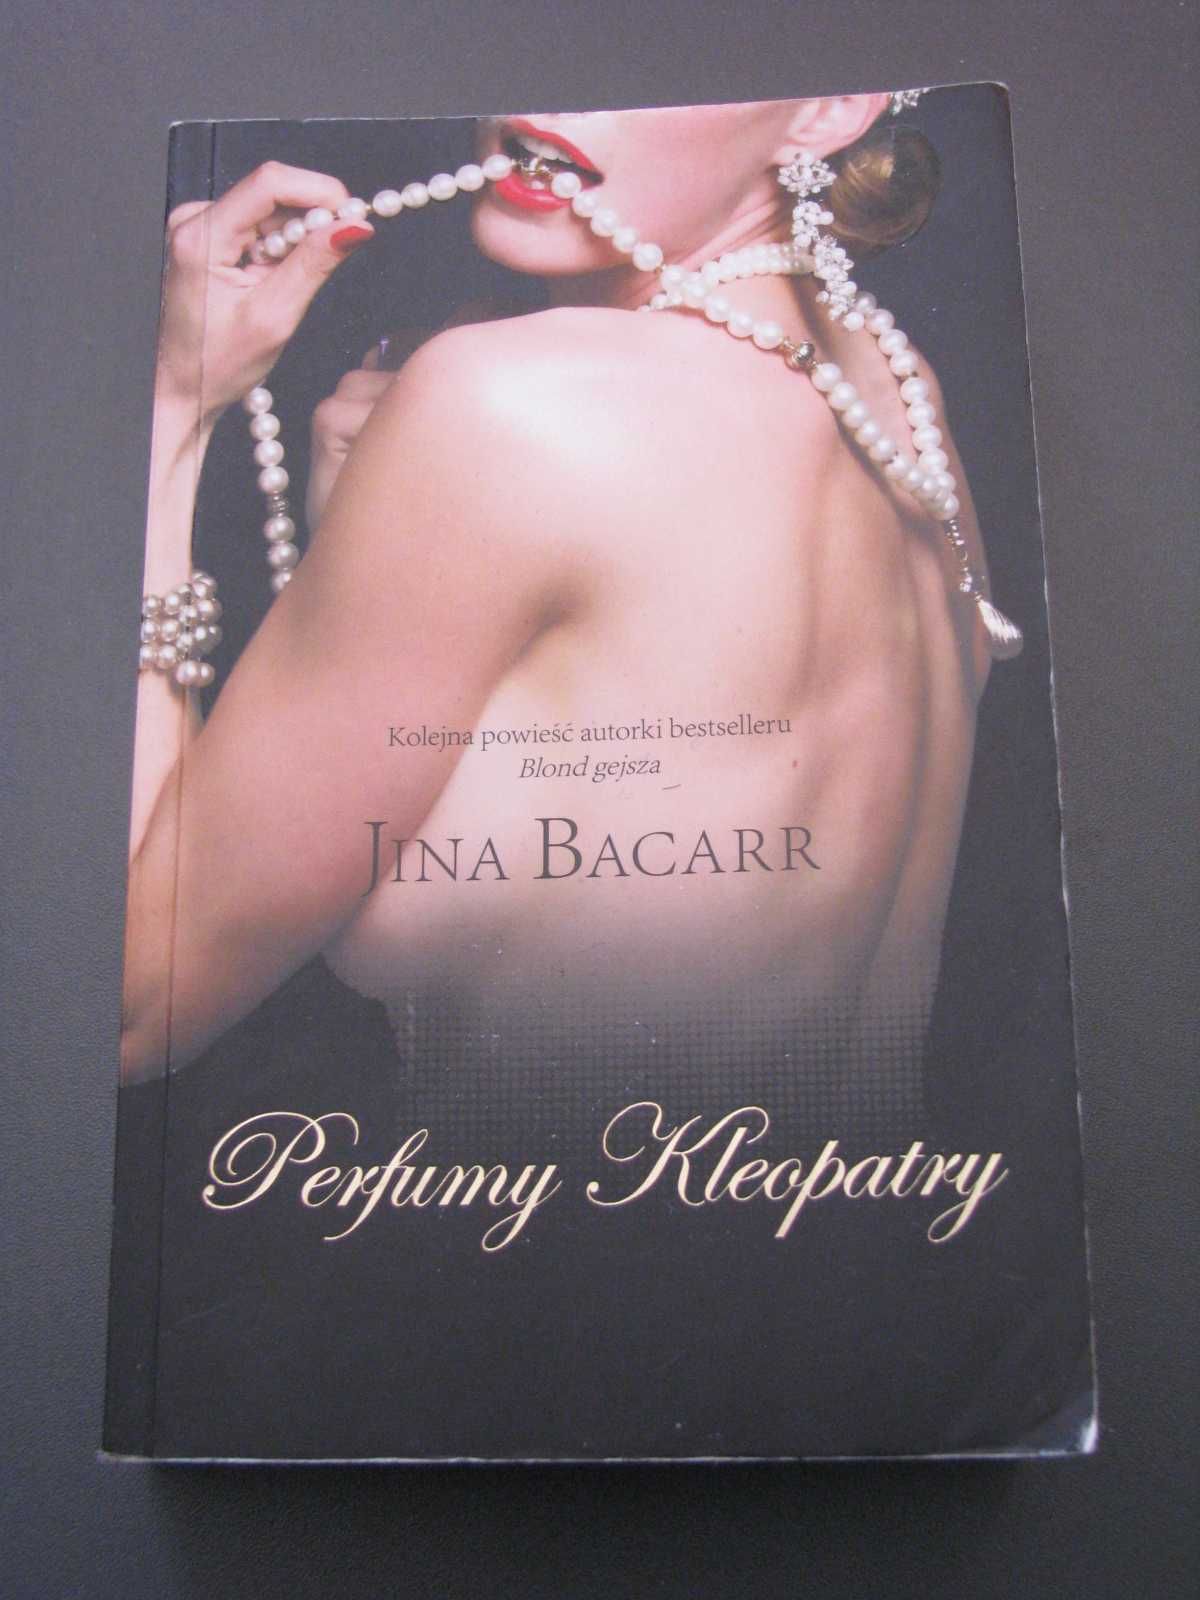 Jina Bacarr "Perfumy Kleopatry"